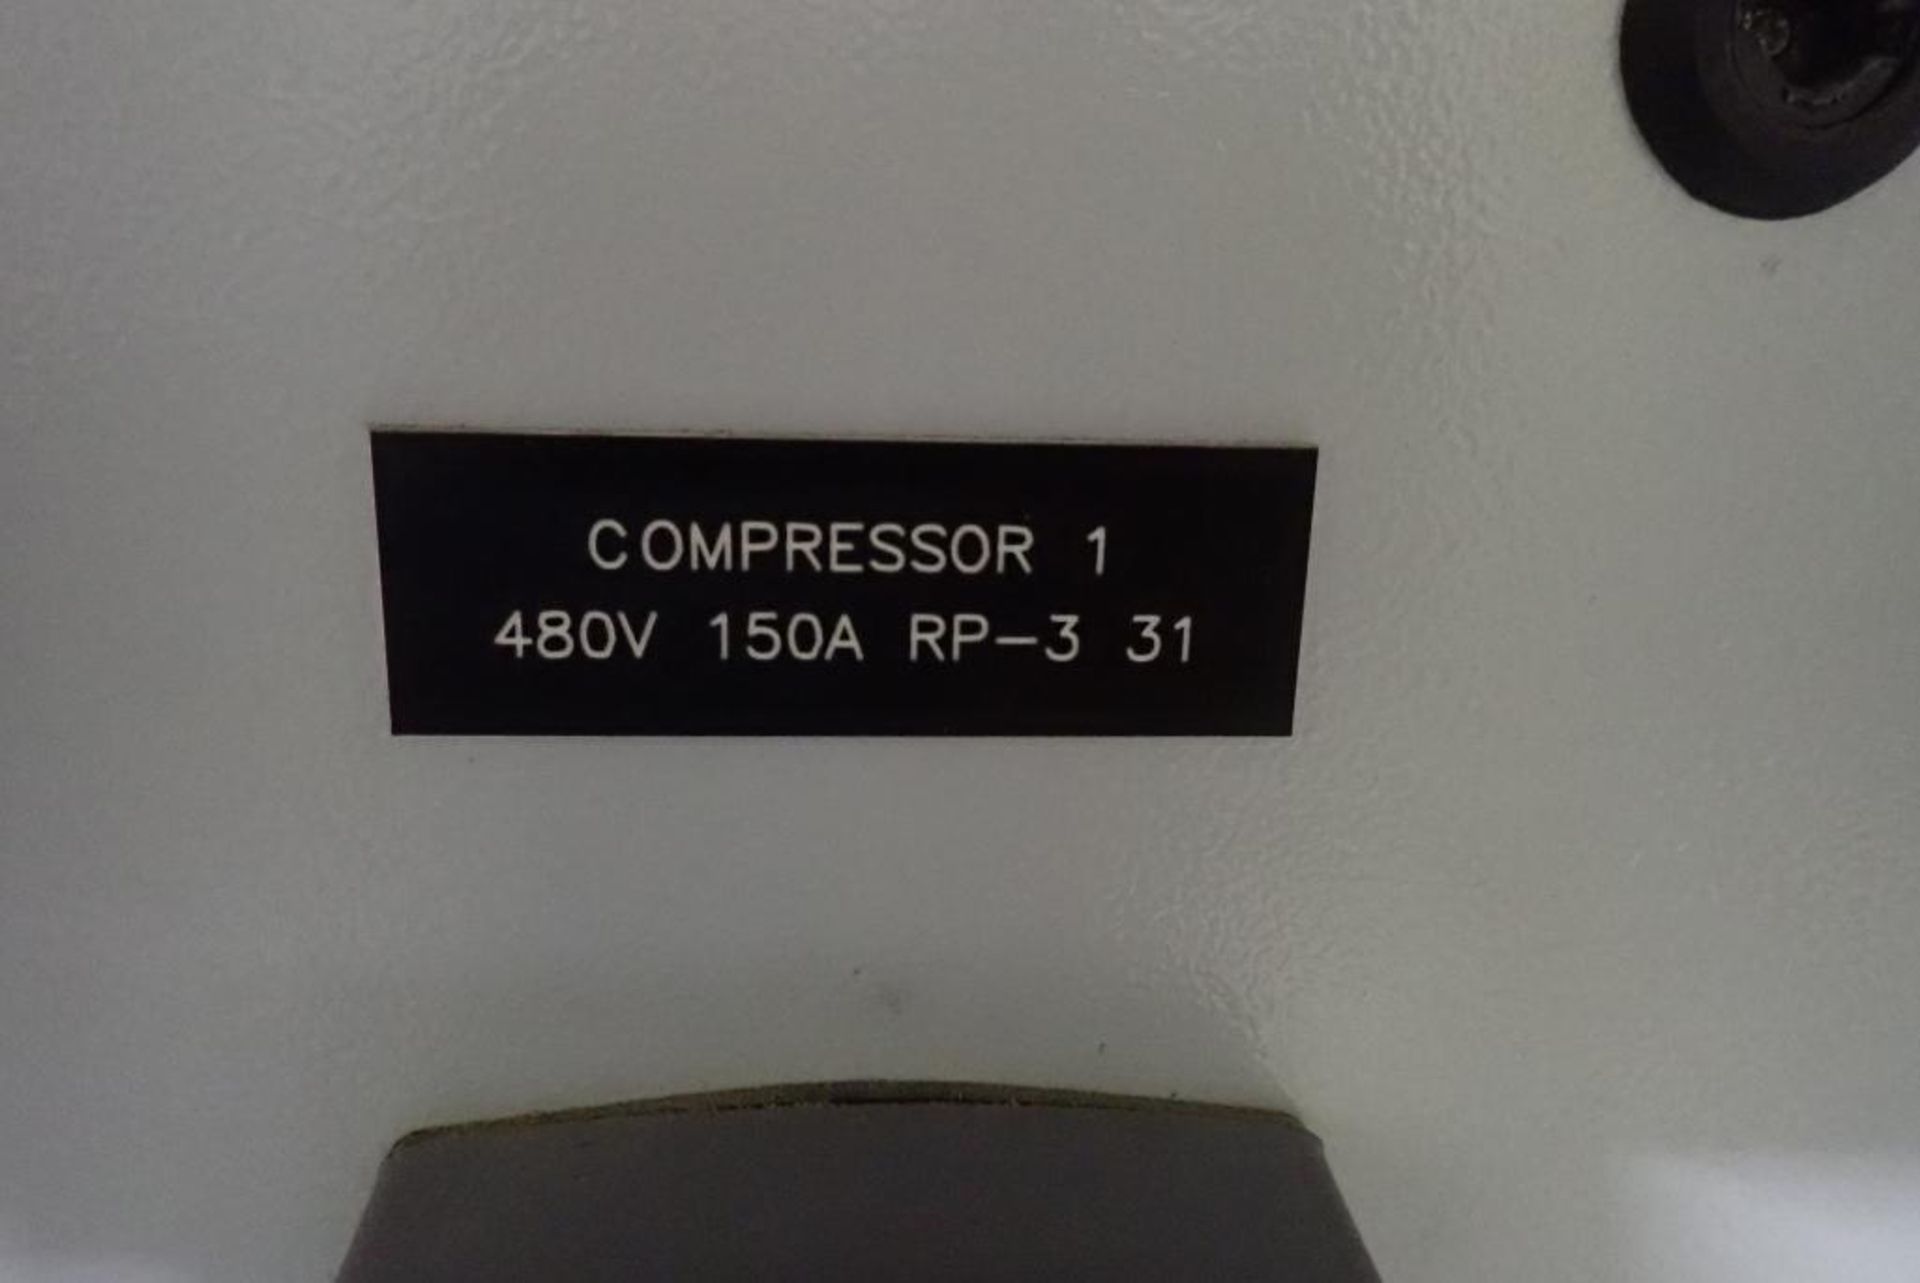 Crepaco 4 cylinder reciprocating ammonia compressor - Image 15 of 15